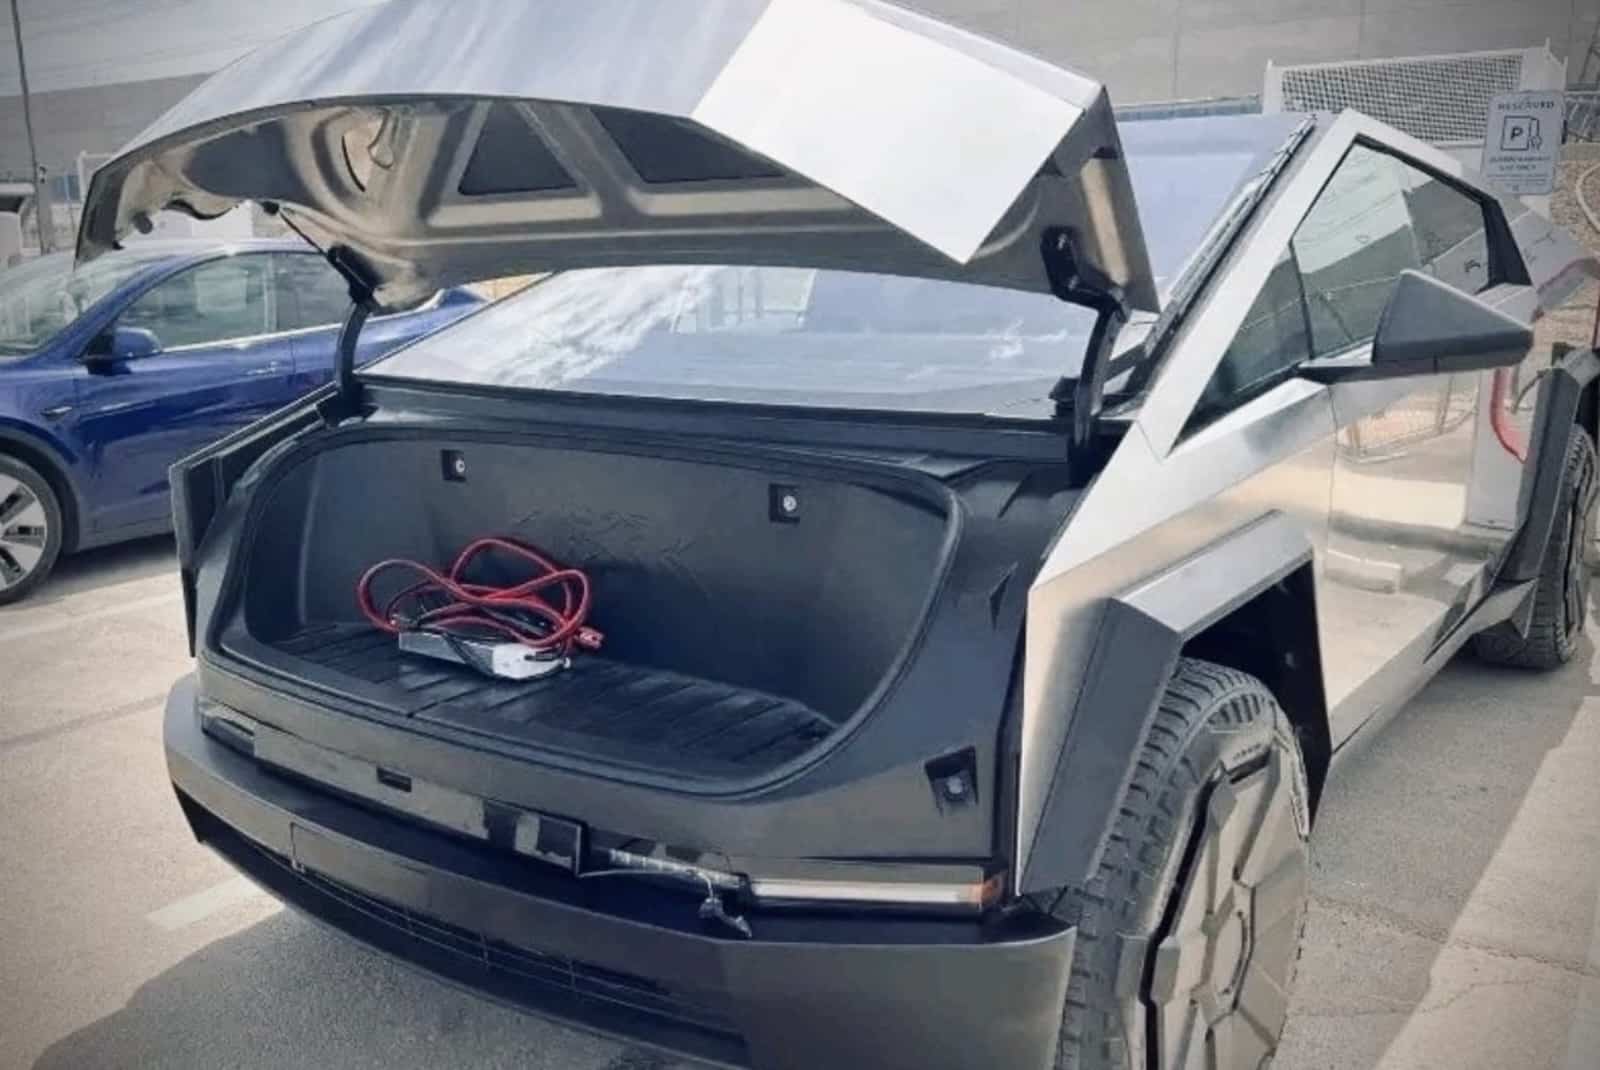 Tesla Cybertruck Prototype: Is The Bed Design A Letdown?